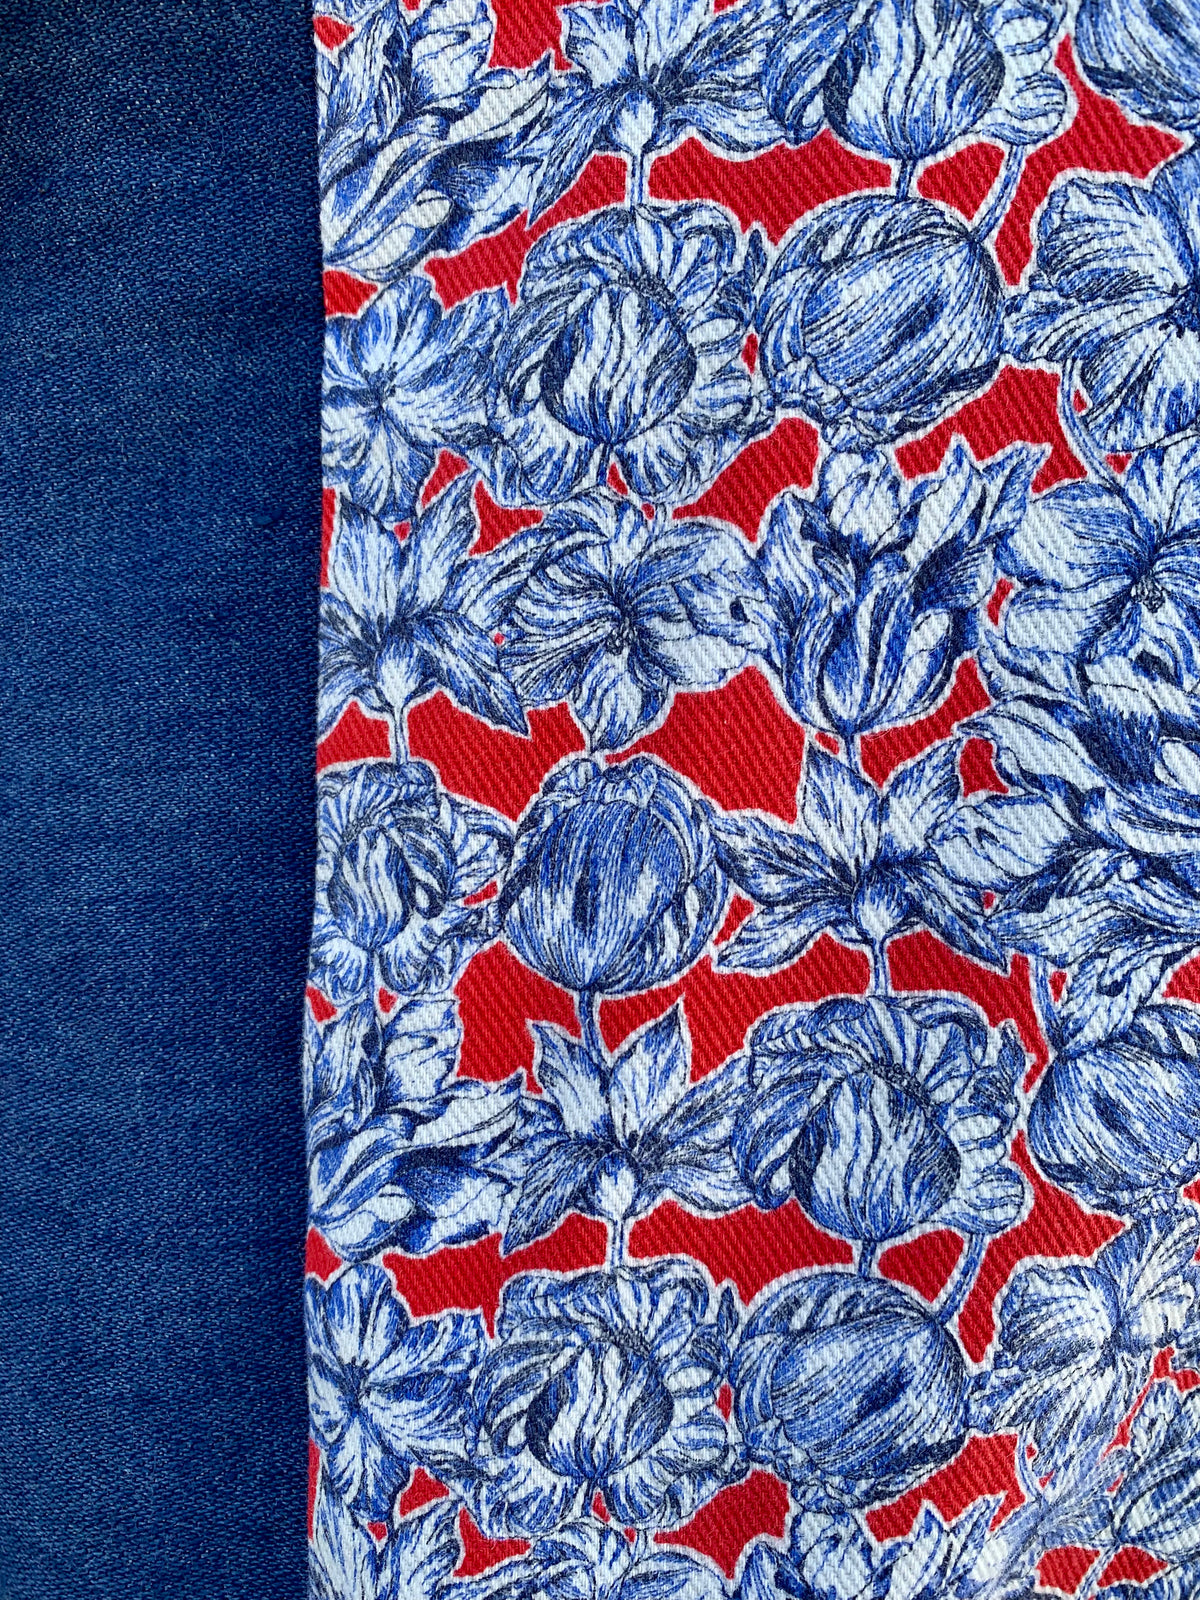 Vida Shoppy Tote - Blue Floral